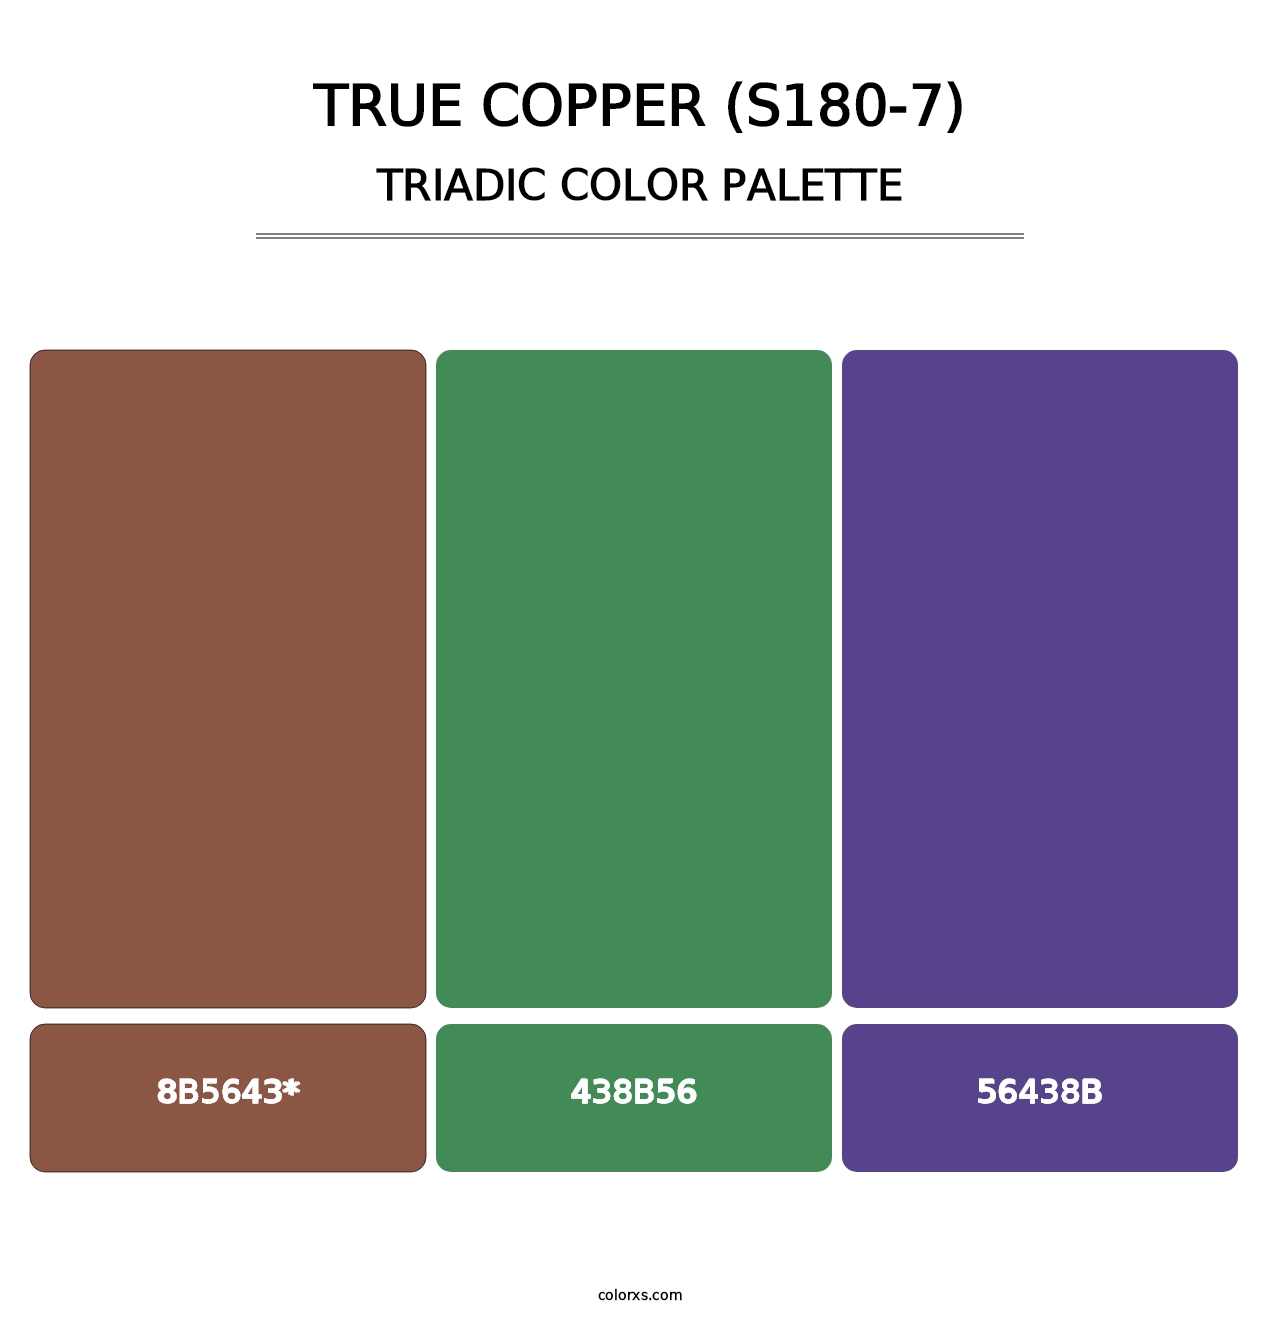 True Copper (S180-7) - Triadic Color Palette